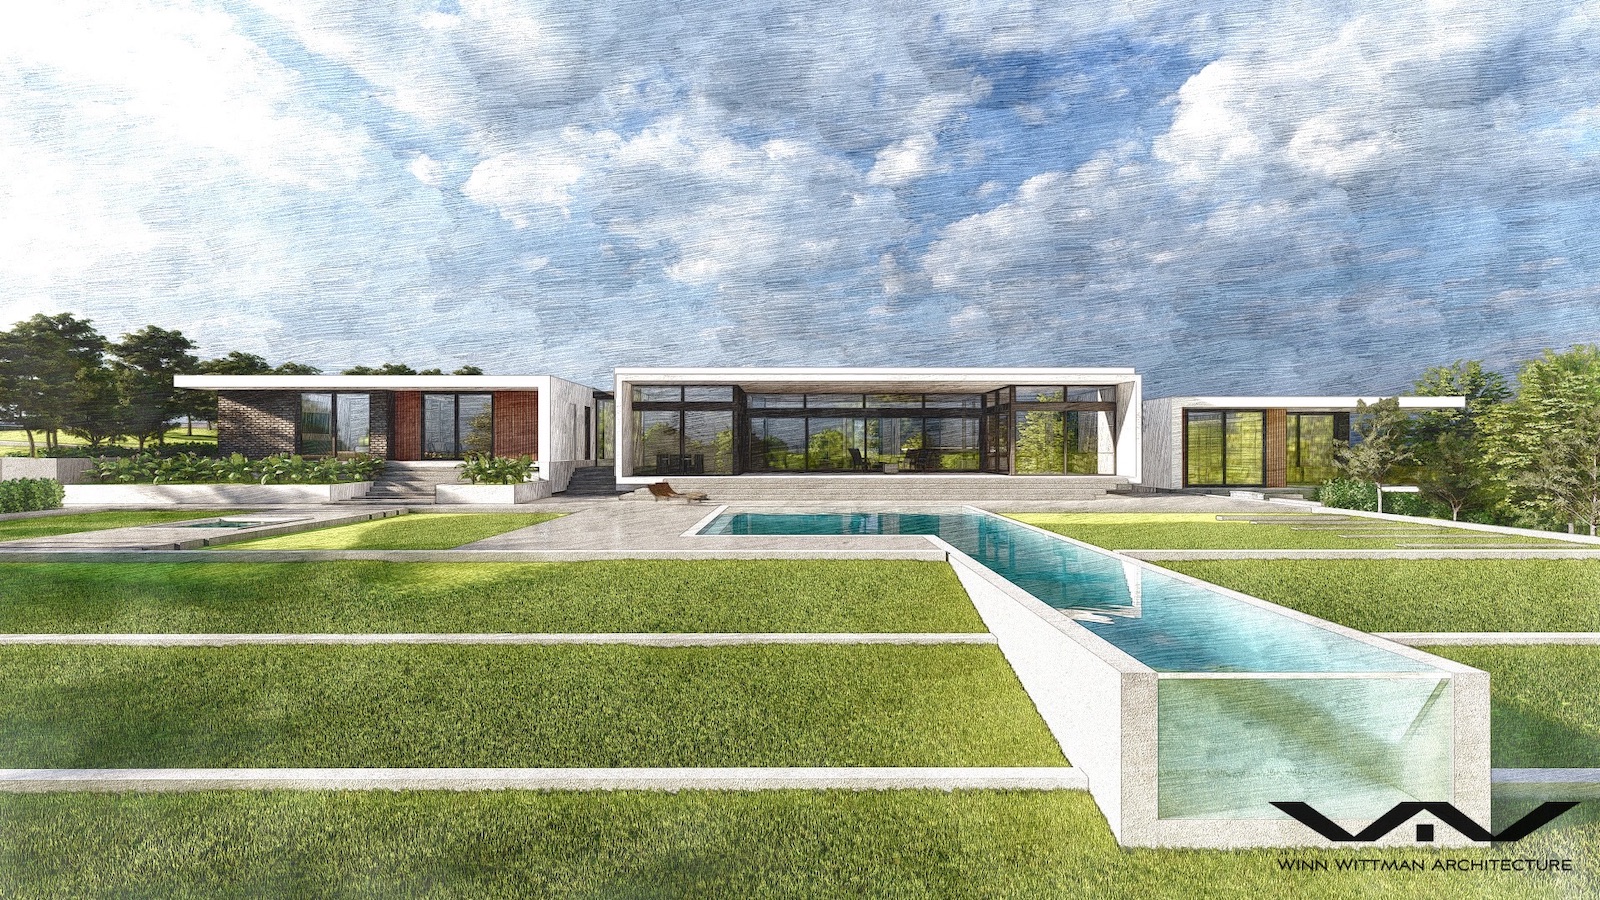 Casa Agarita - Winn Wittman Architecture